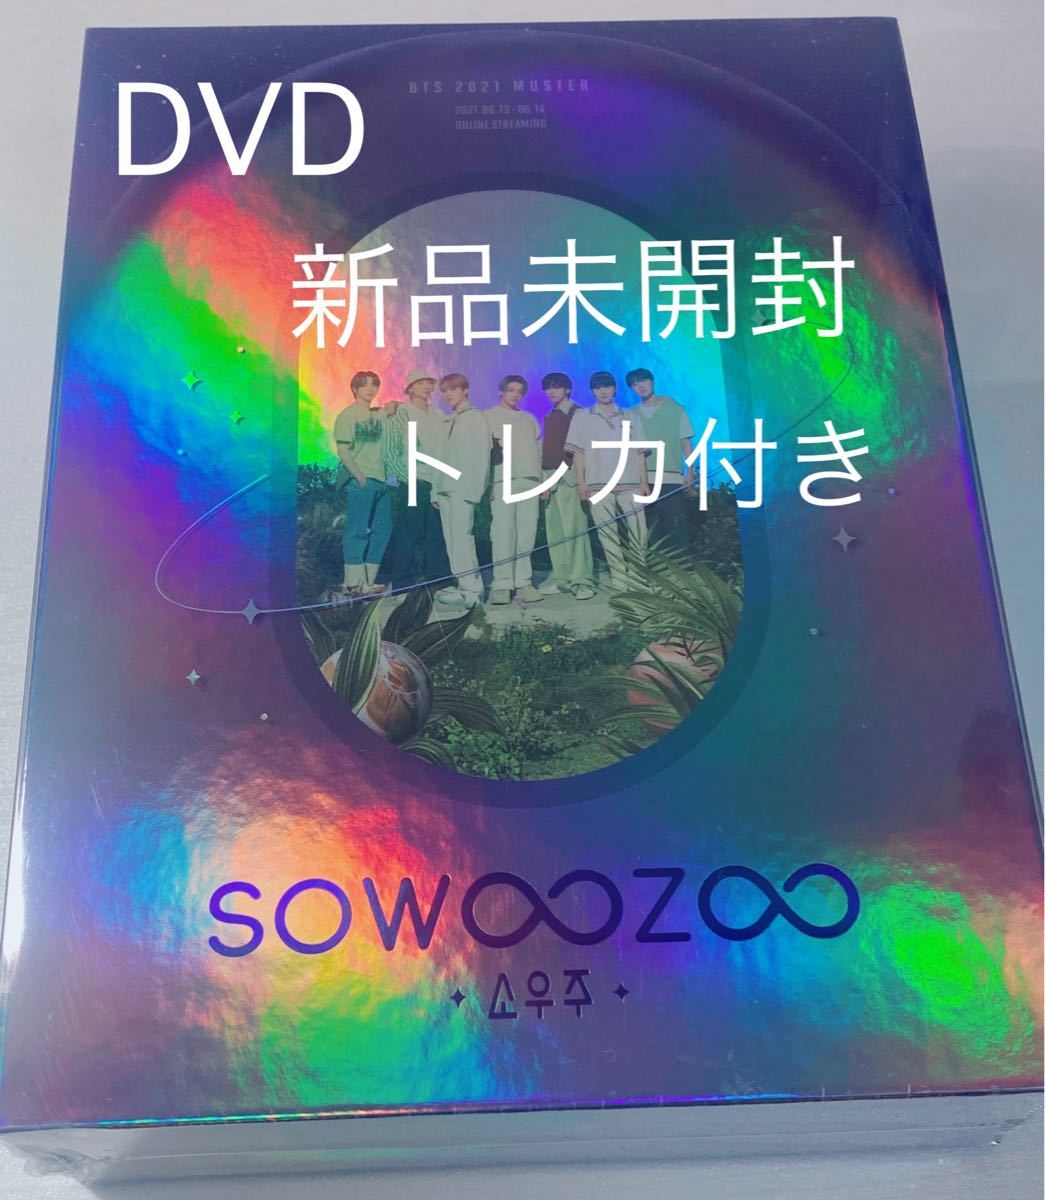 DVD】BTS SOWOOZOO ソウジュ 日本語字幕 新品未使用-